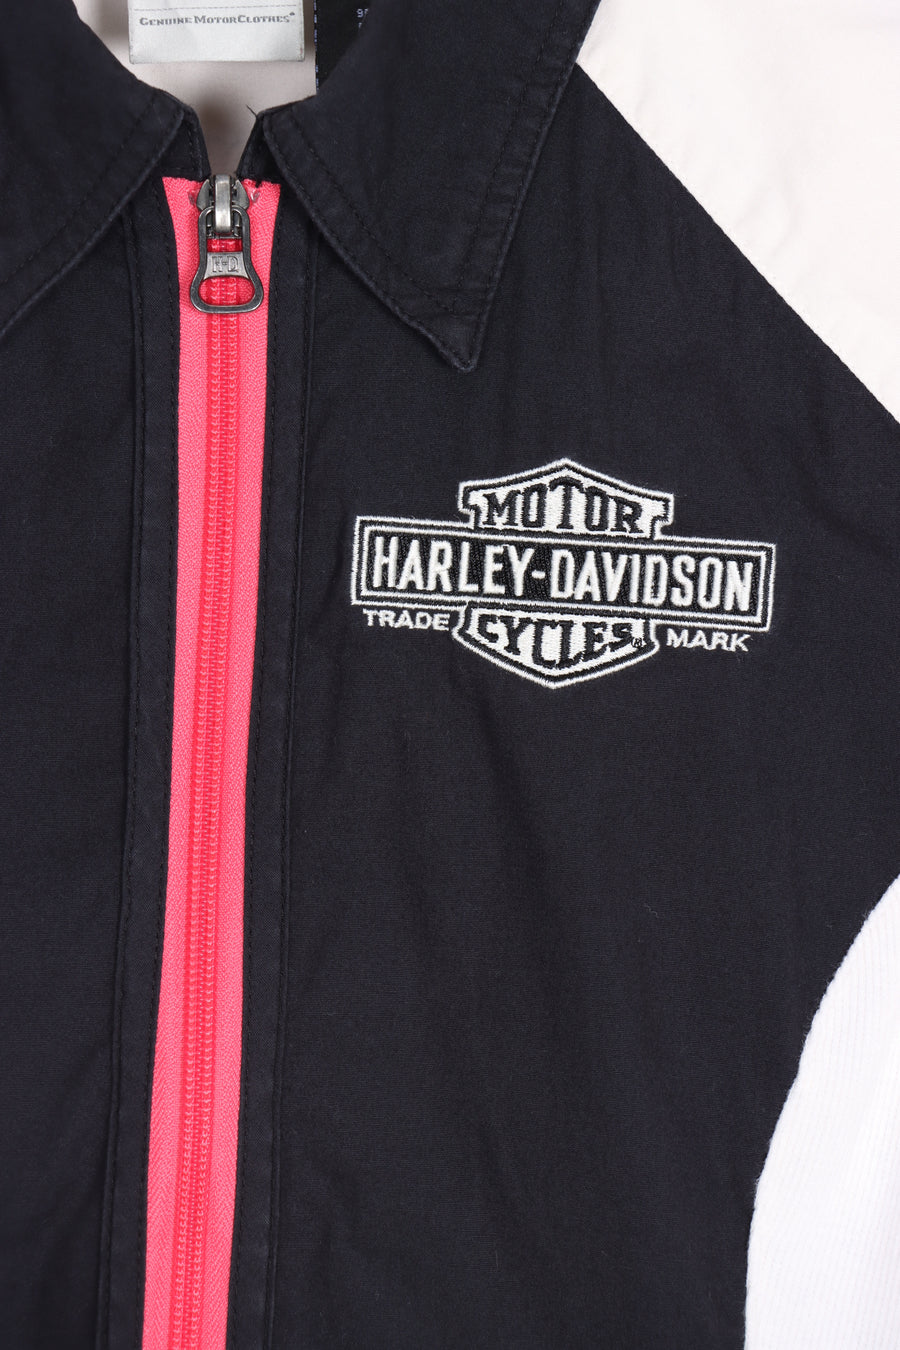 HARLEY DAVIDSON Embroidered Pink & Black Zip Up Tee (Women's M)